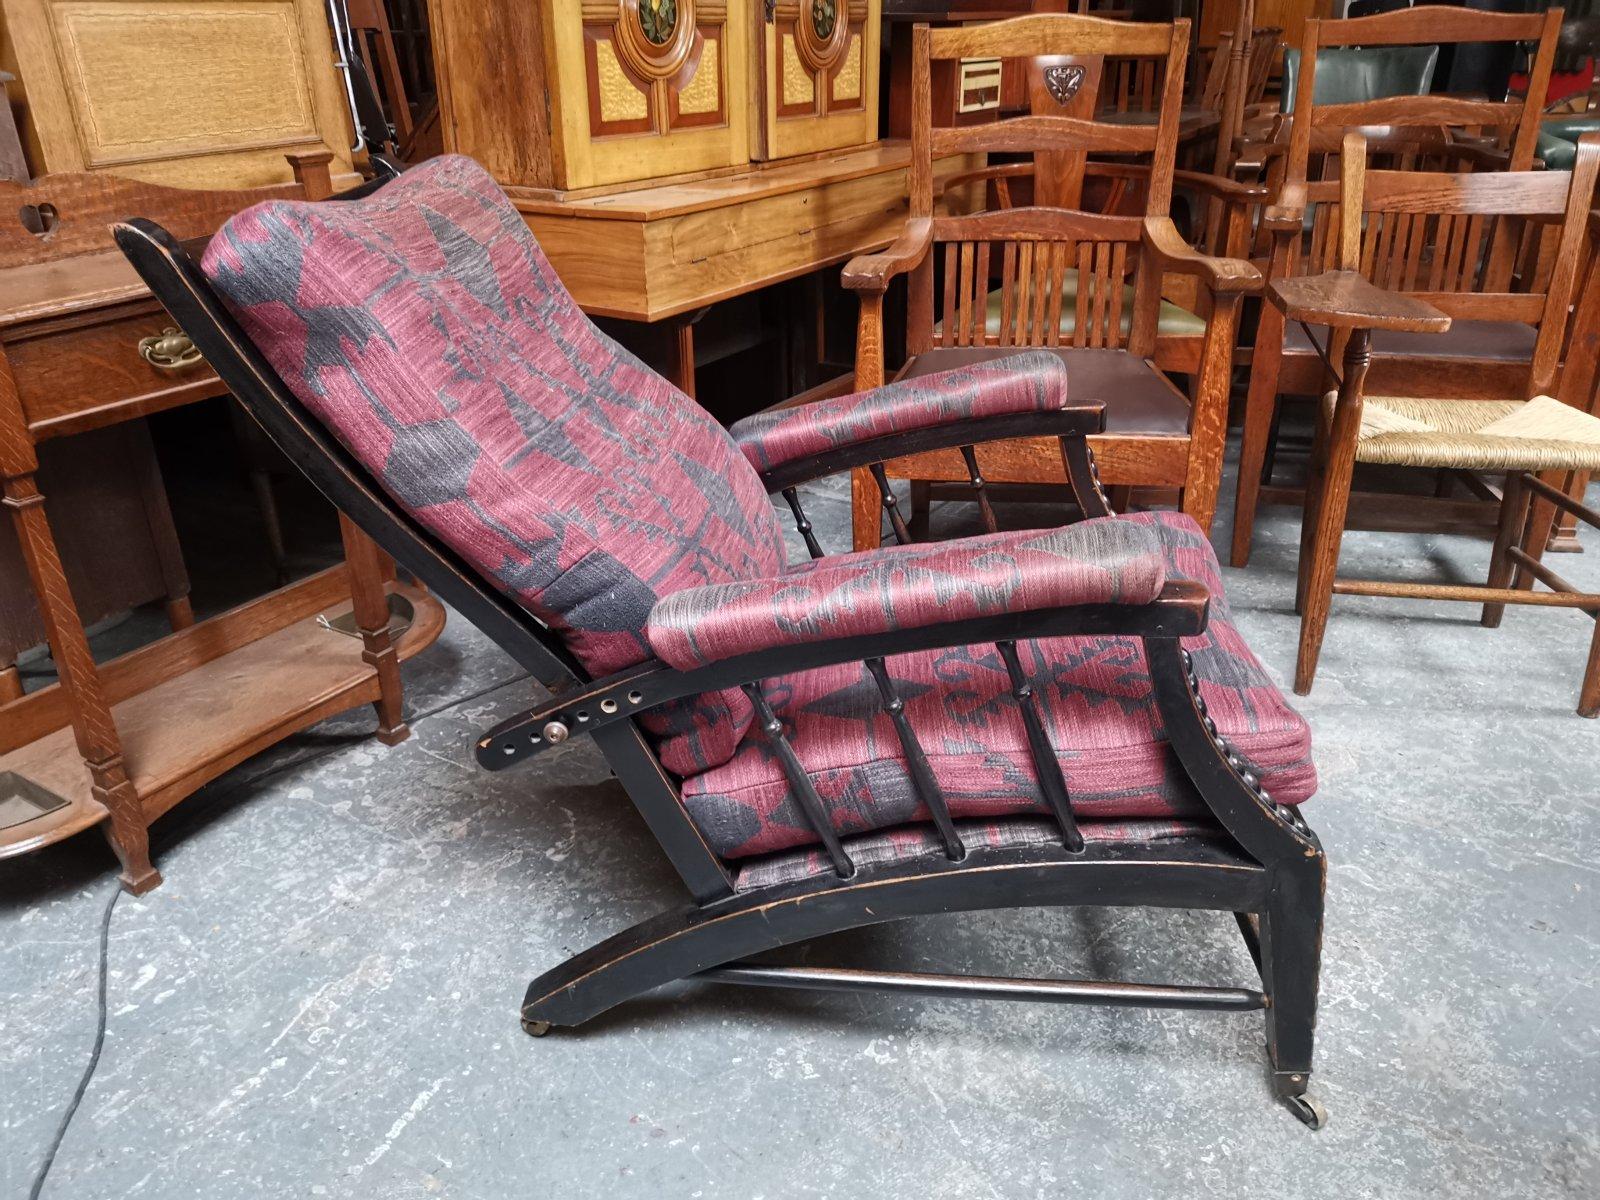 mary webb wood chair